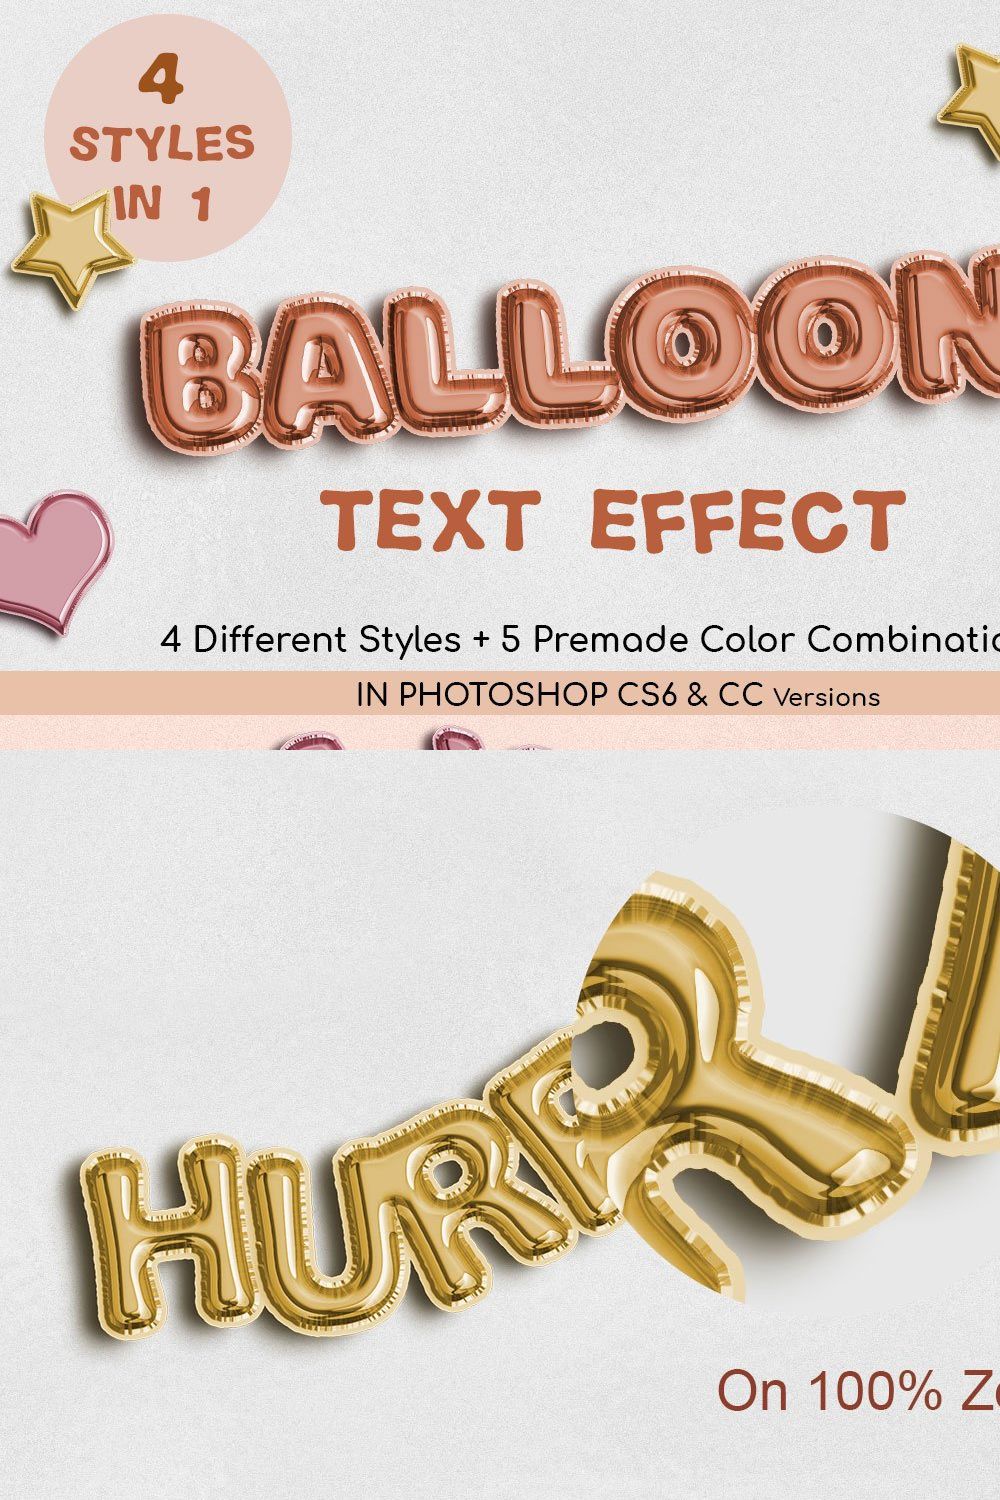 Balloon Foil Text Effect PS pinterest preview image.